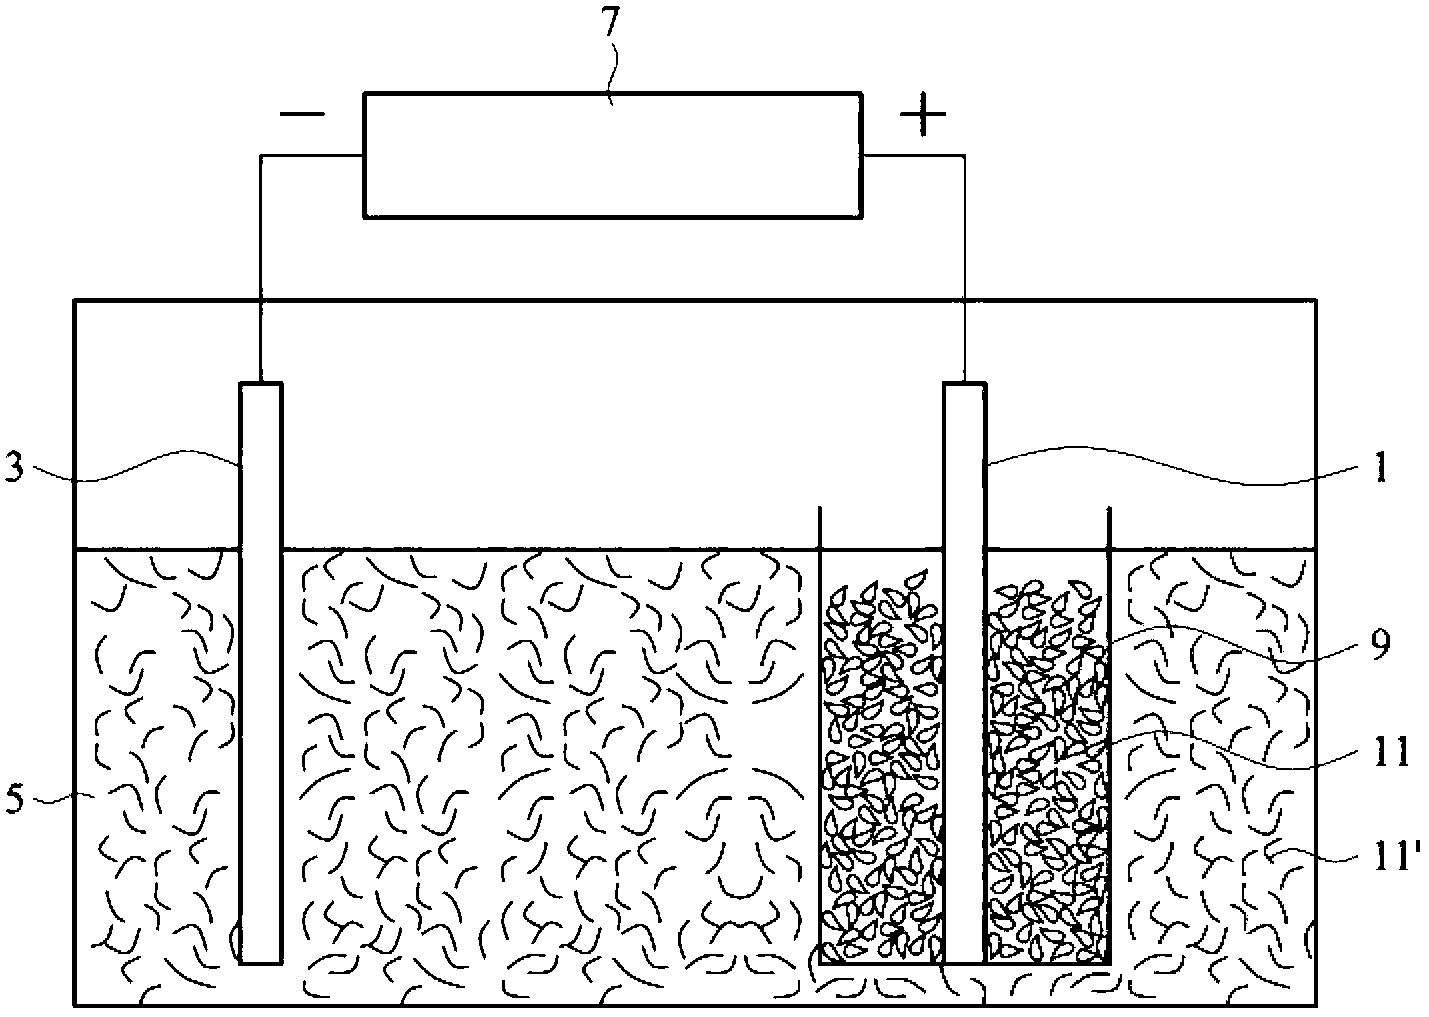 Methods of forming graphene